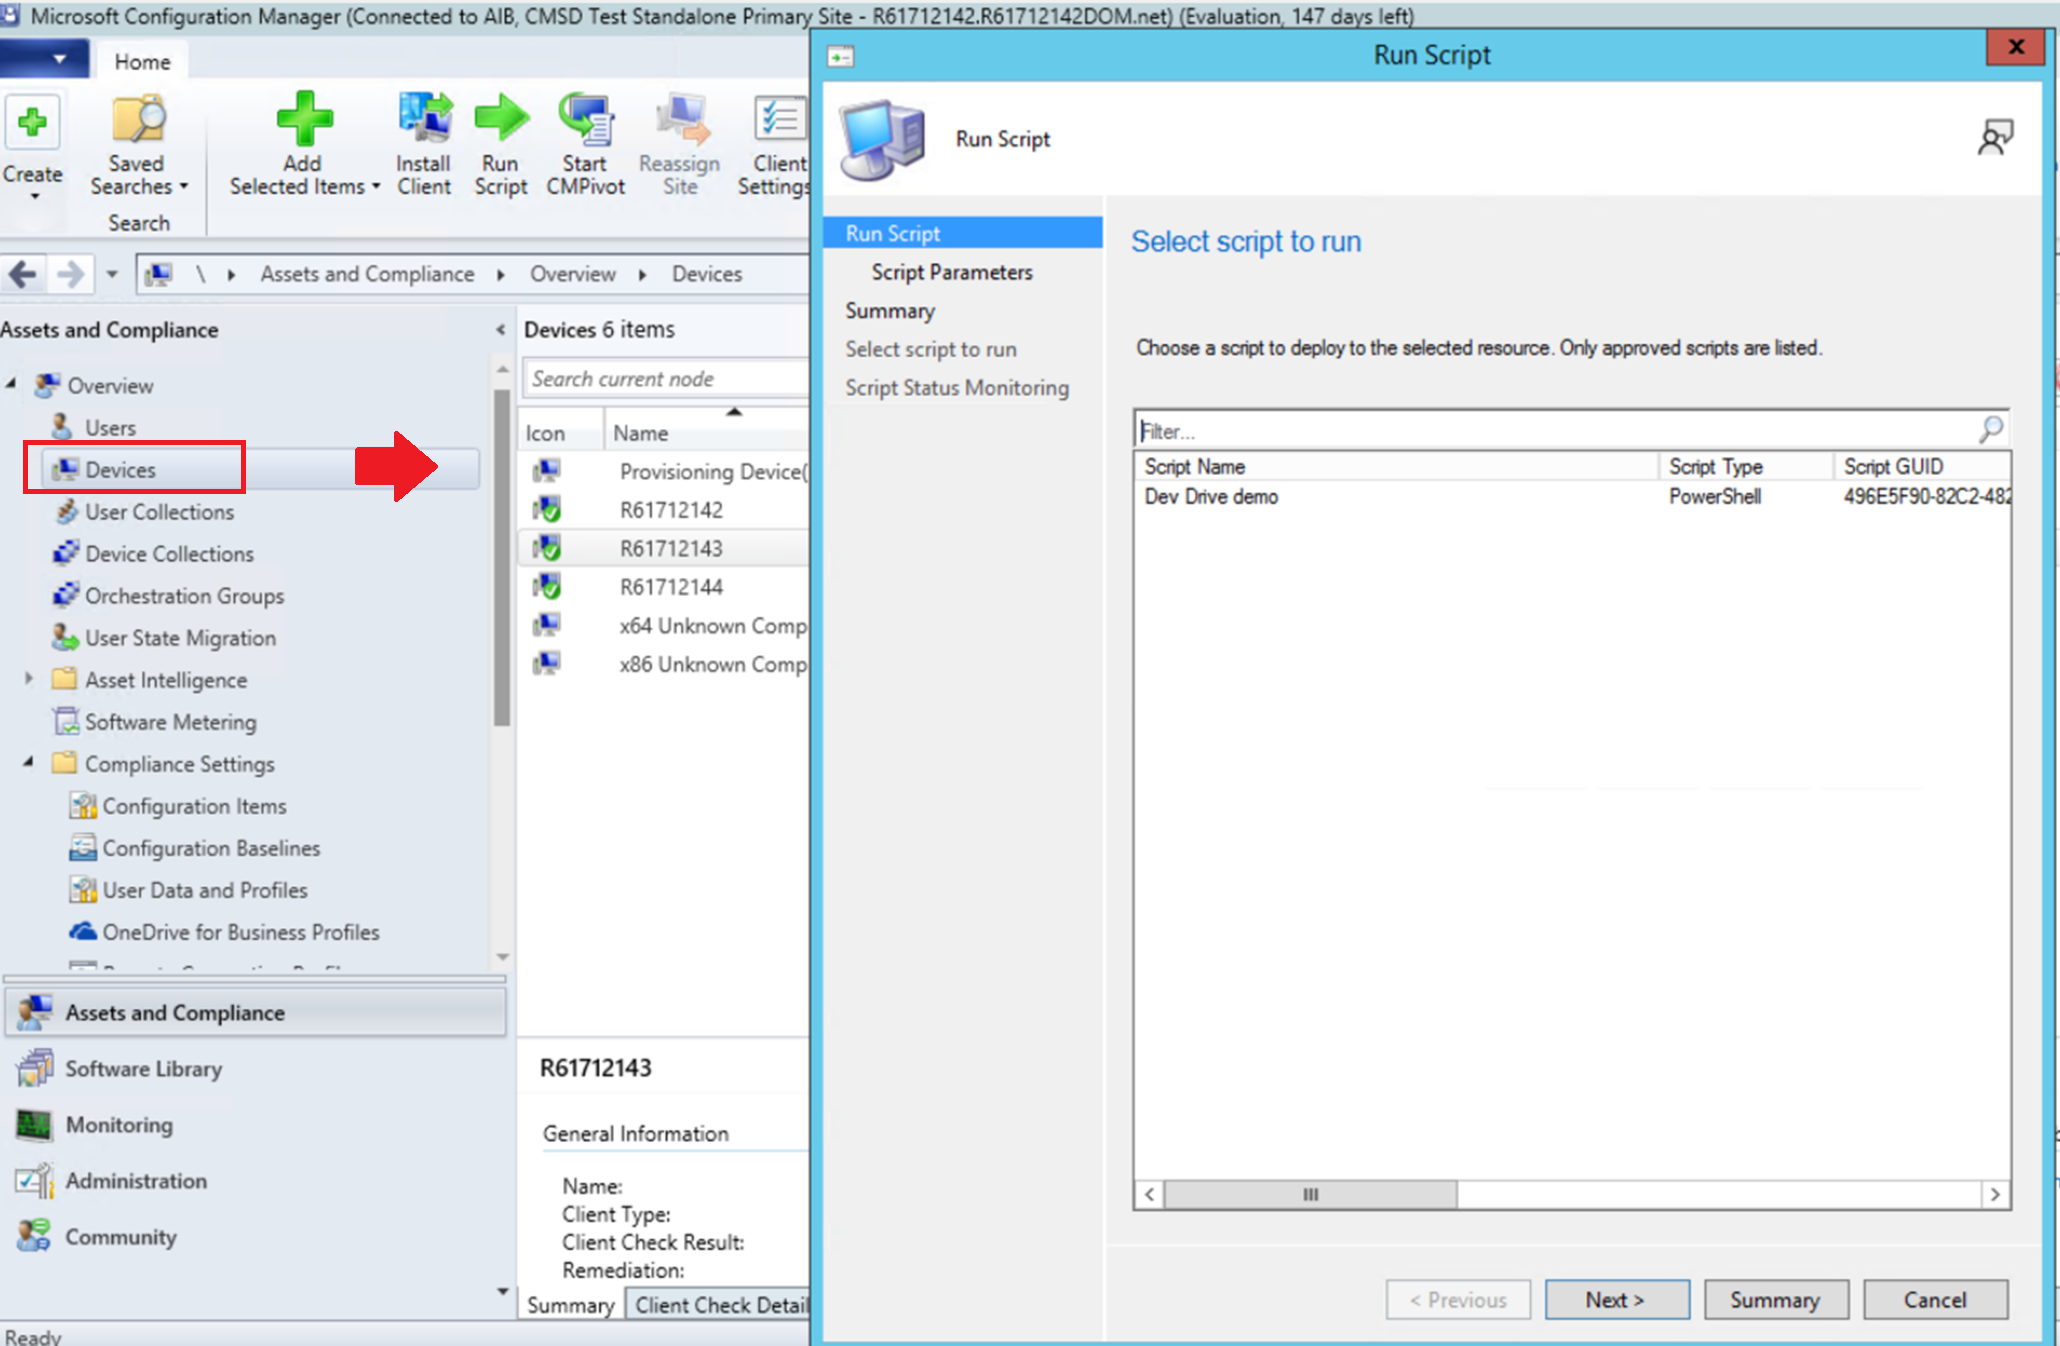 Screenshot of Microsoft Configuration Manager Run Script window showing the Dev Drive demo script